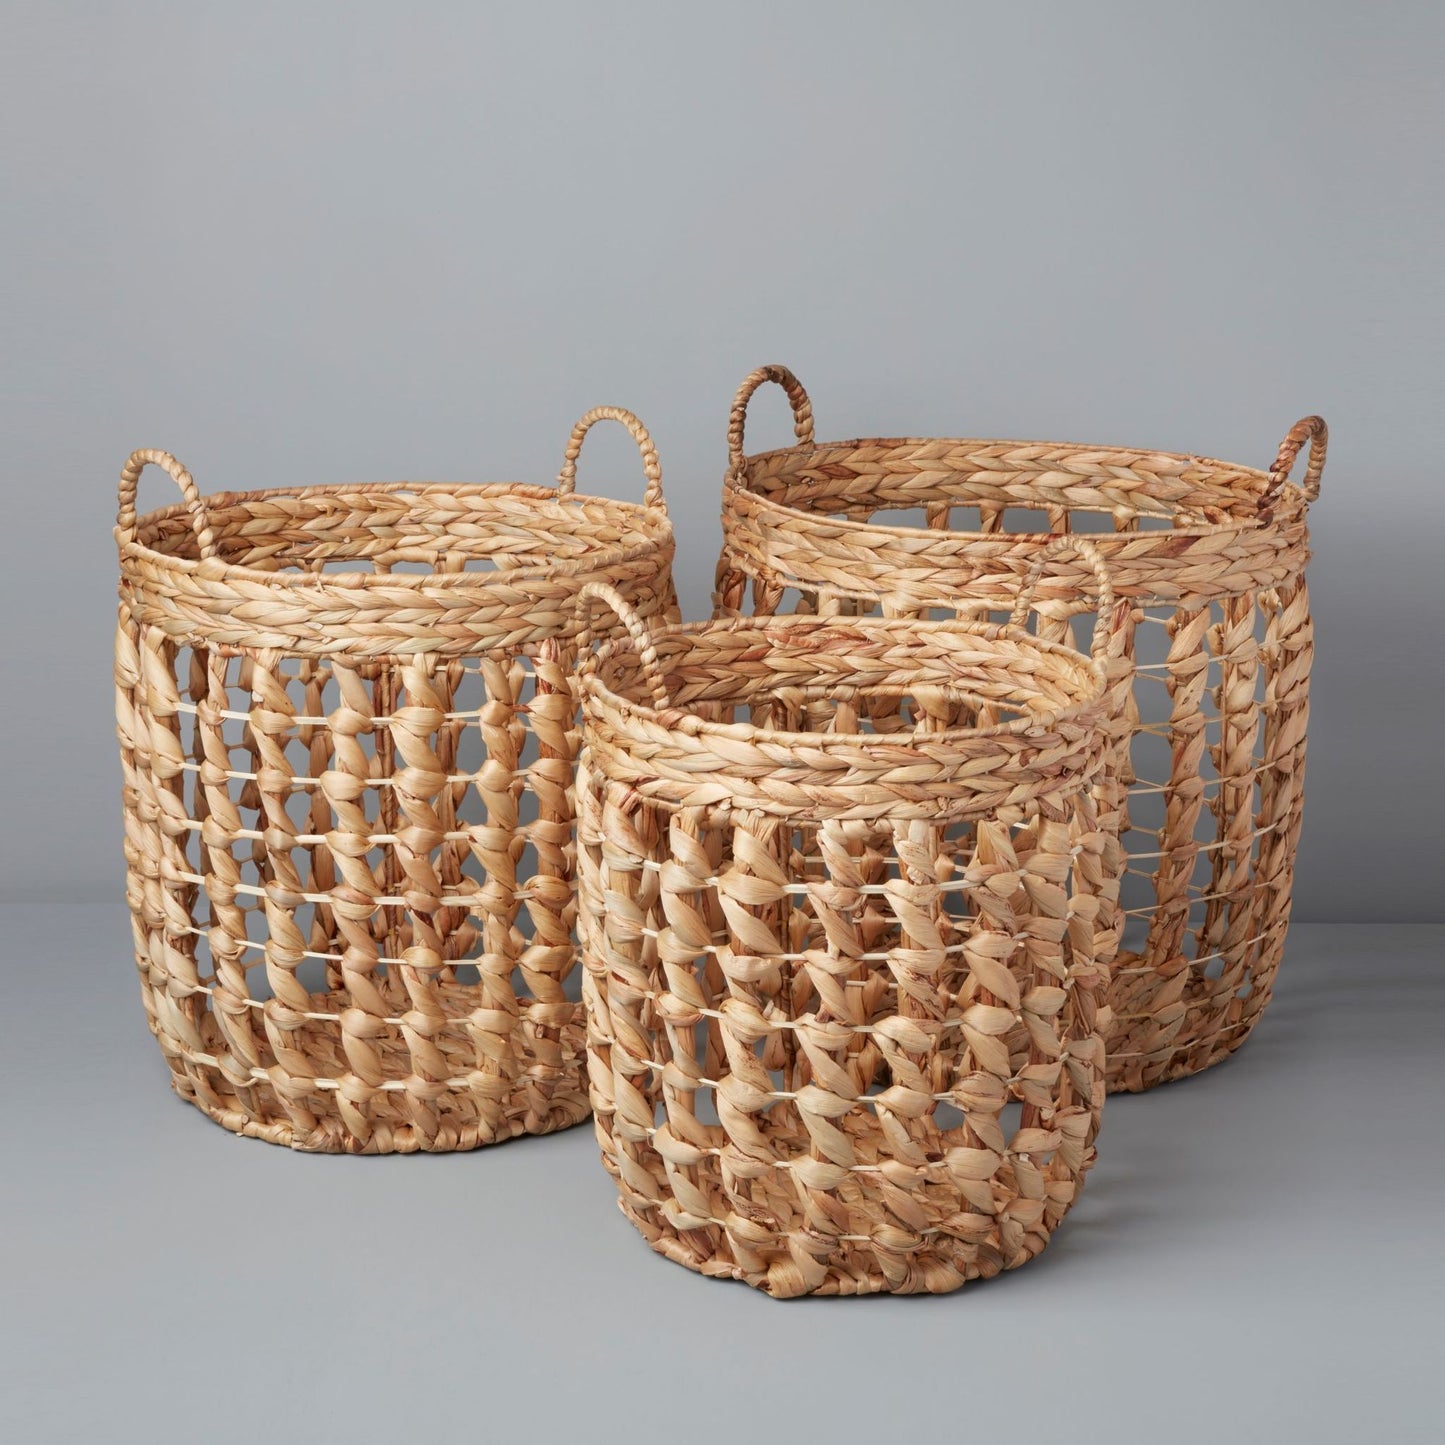 Large Wicker Storage Basket, Set of 3, Woven Water Hyacinth